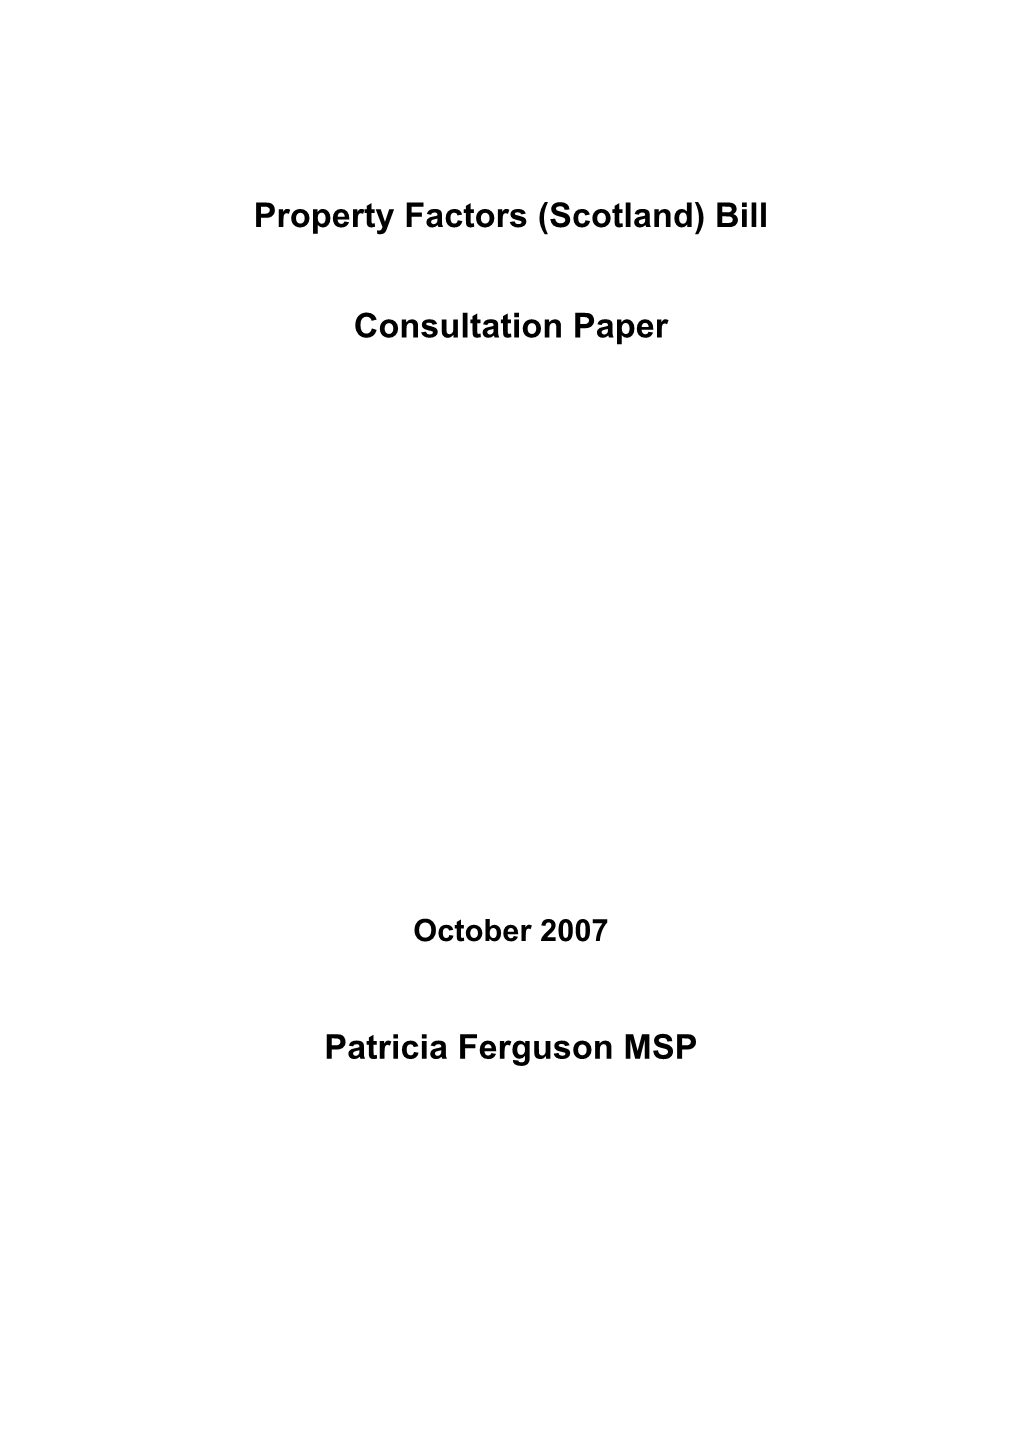 Proposed Property Factors (Scotland) Bill Consultation